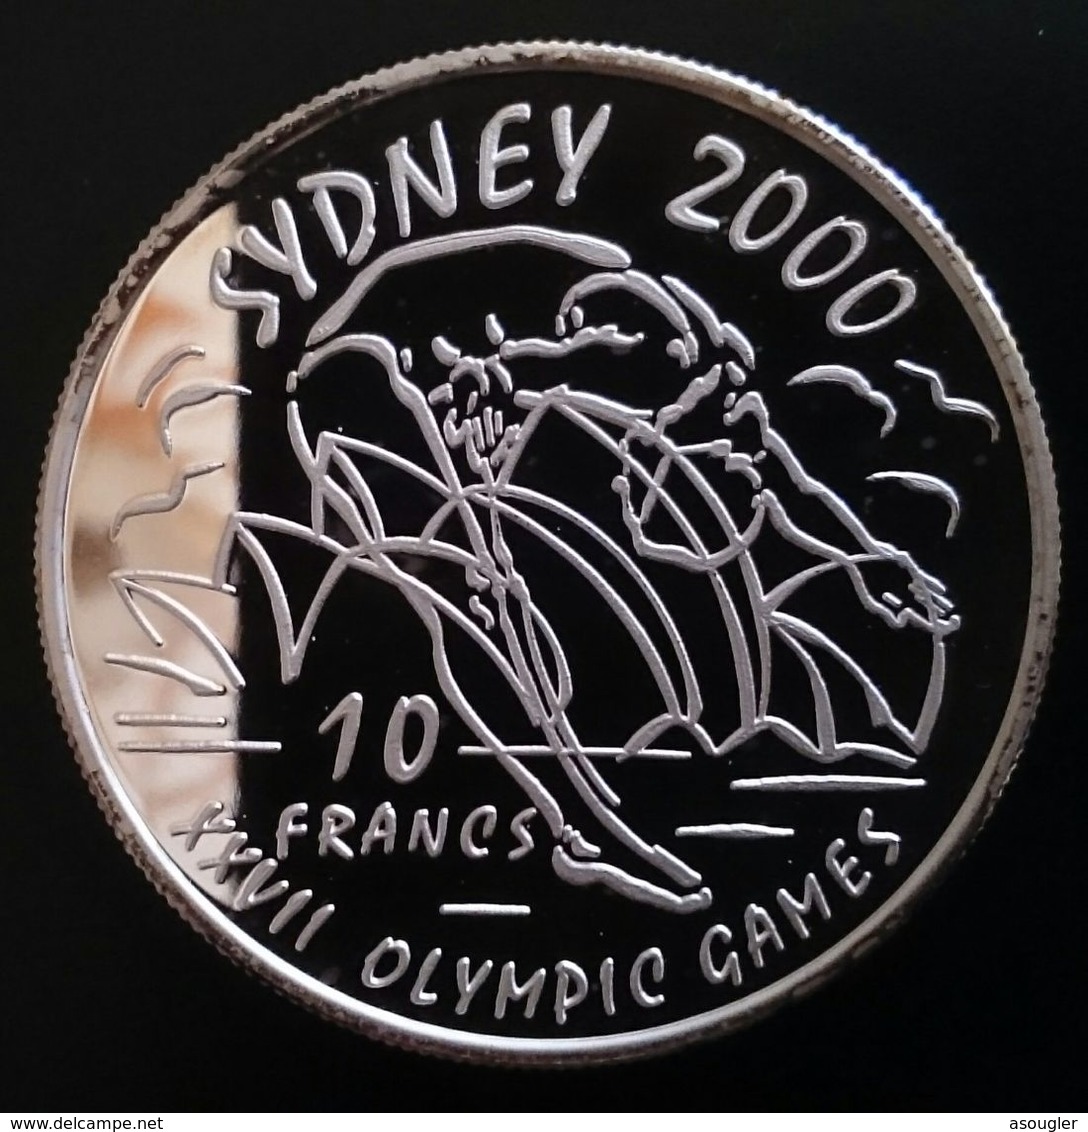 Congo Democratic Republic 10 Francs 1999 SILVER PROOF "Sydney 2000" Free Shipping Via Registered Air Mail - Congo (Democratische Republiek 1998)